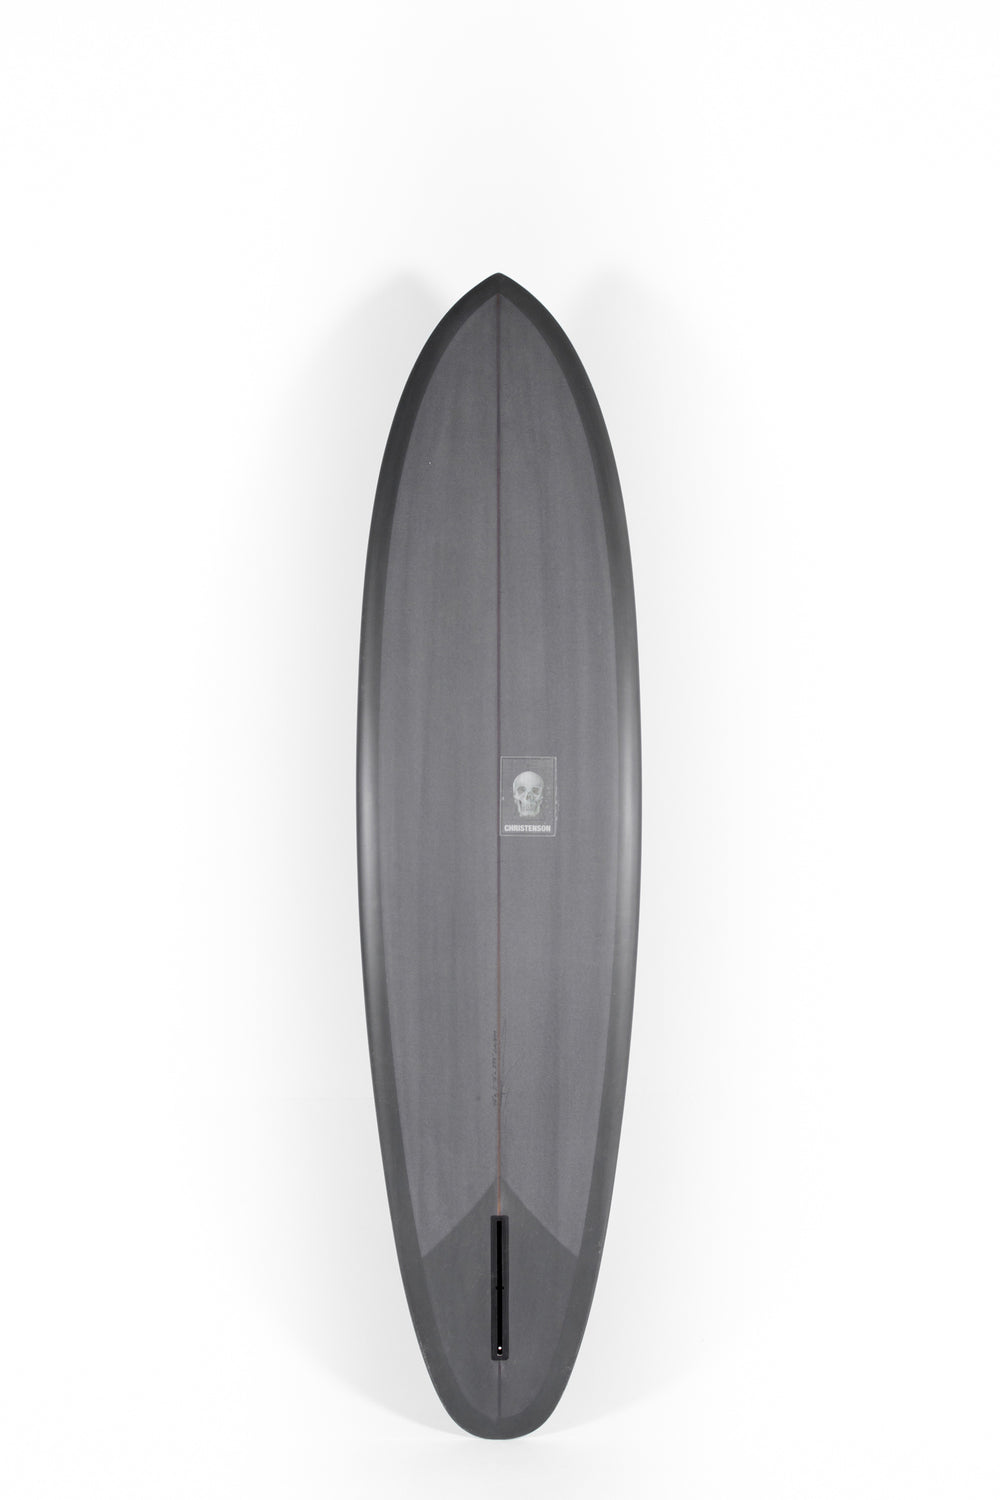 Christenson Surfboards - FLAT TRACKER 2.0 - 7'4